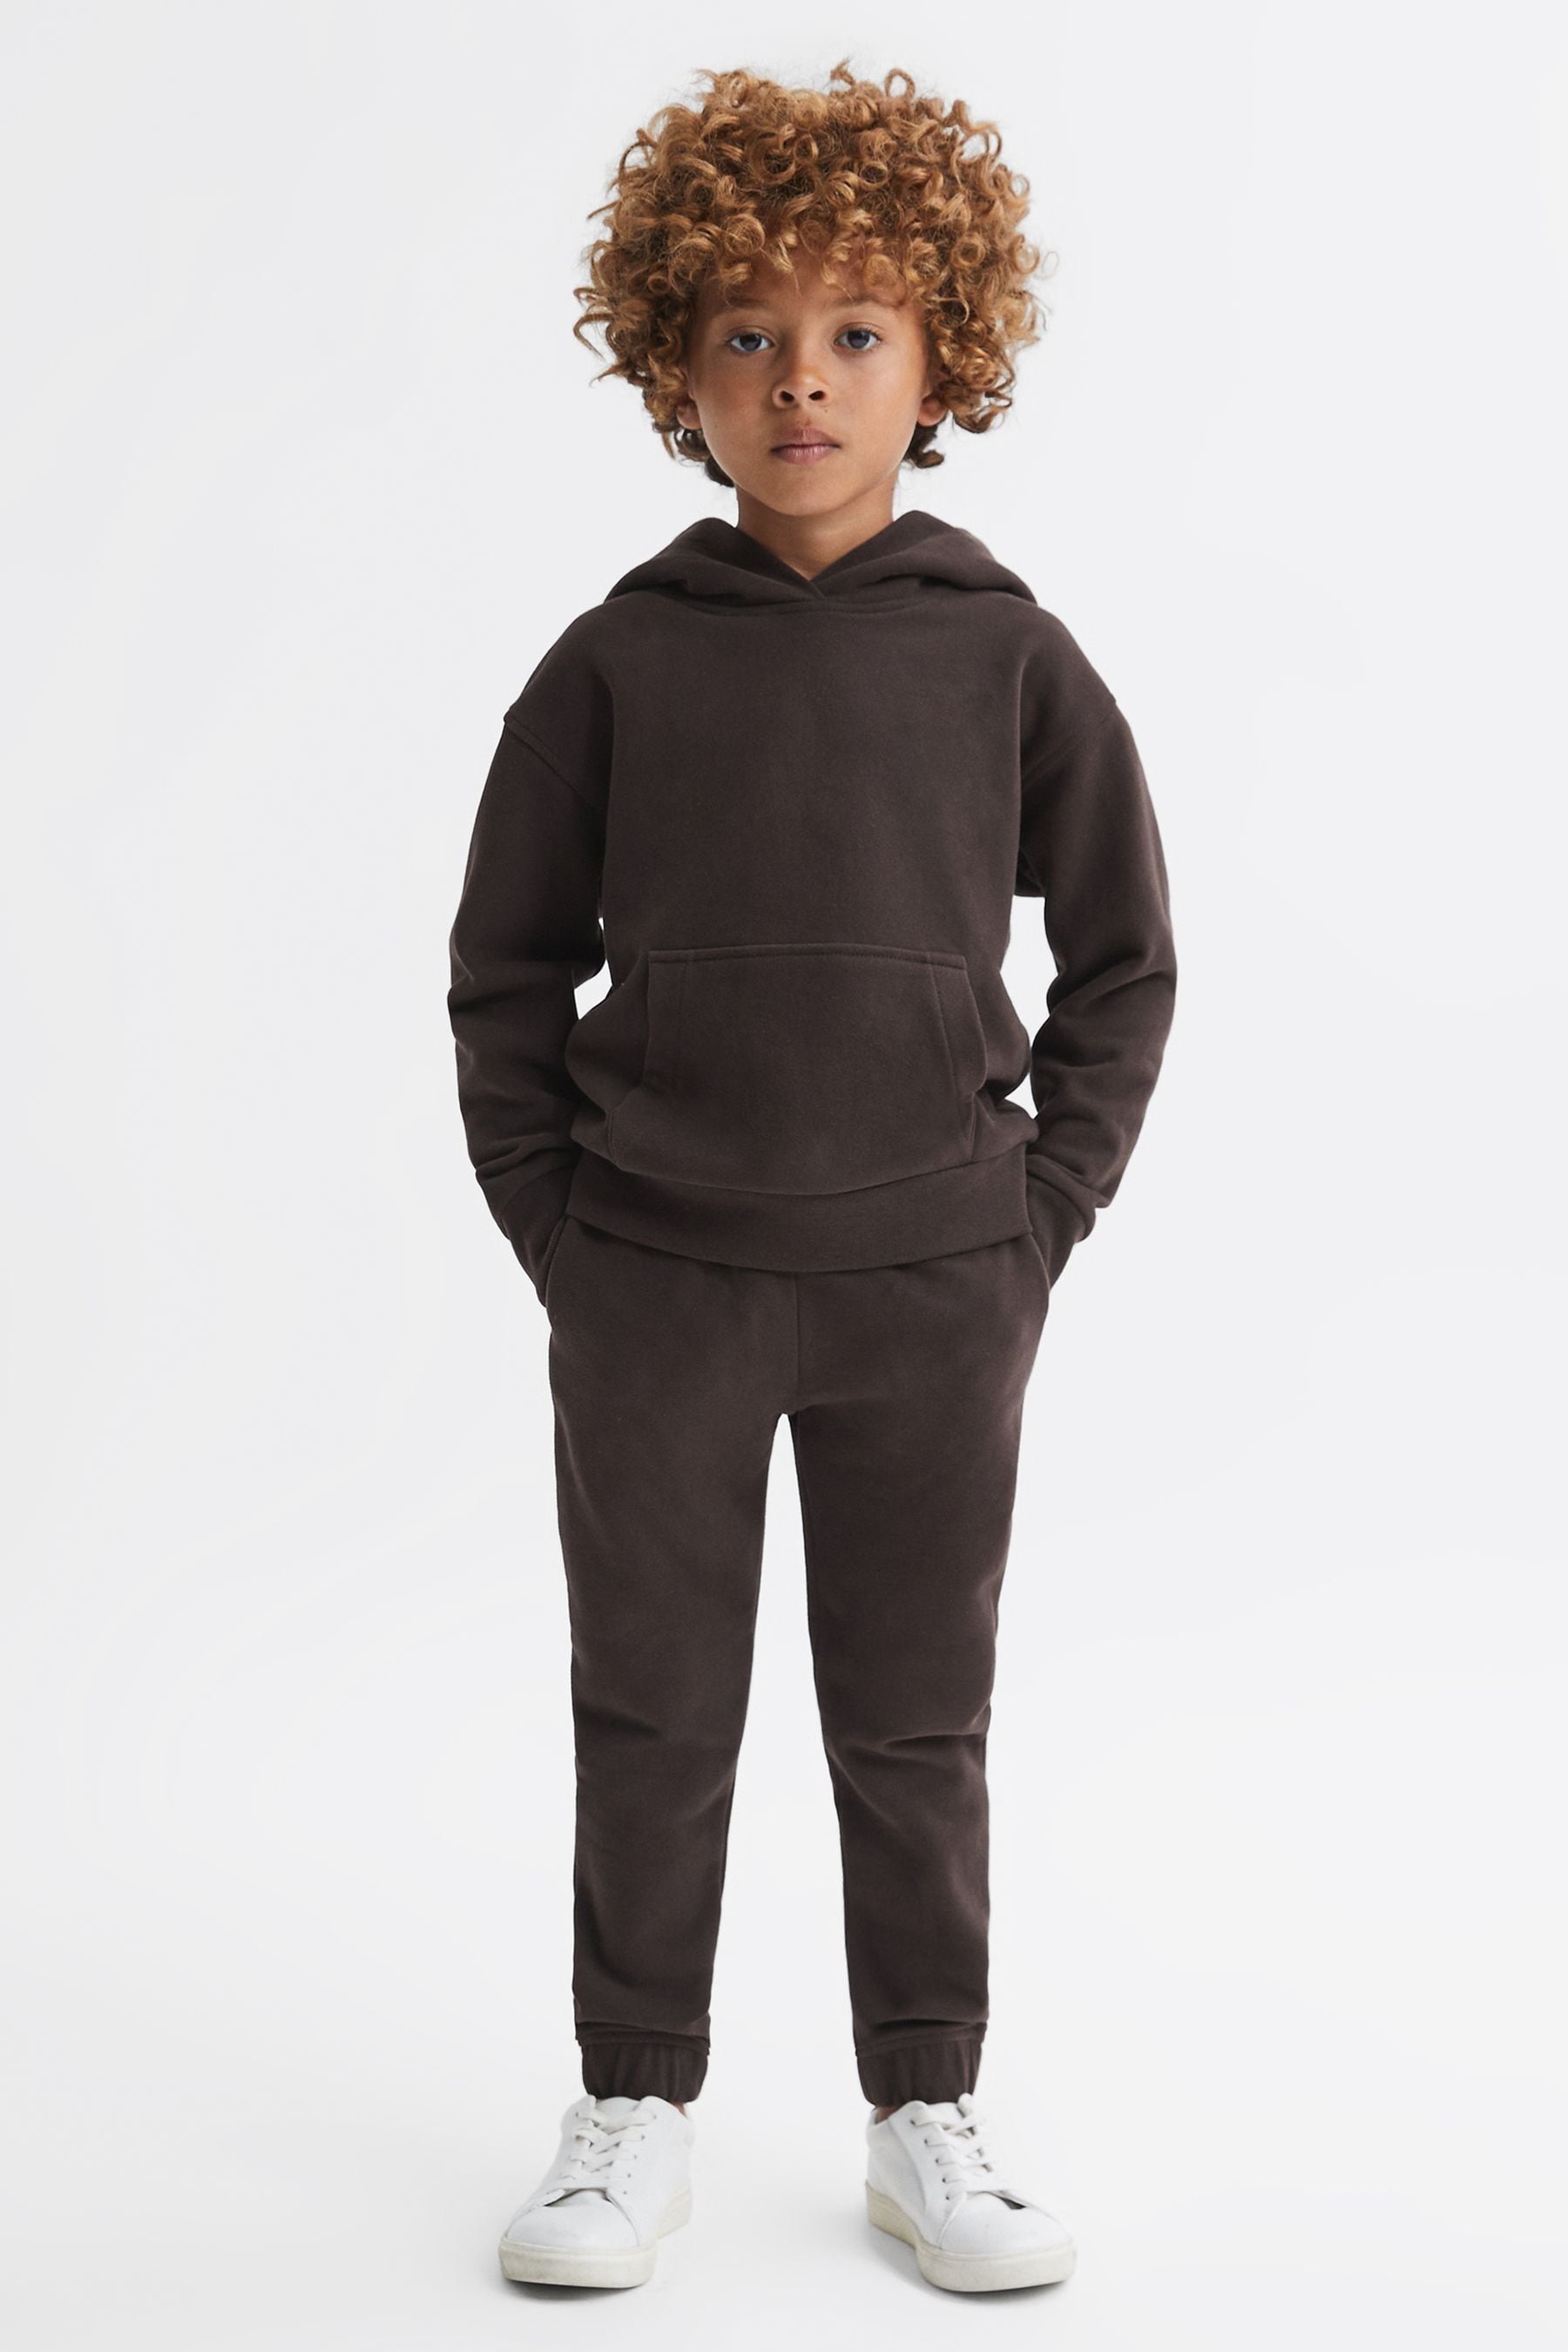 Reiss Kids' Alexander - Chocolate Junior Oversized Cotton Jersey Hoodie, Age 3-4 Years